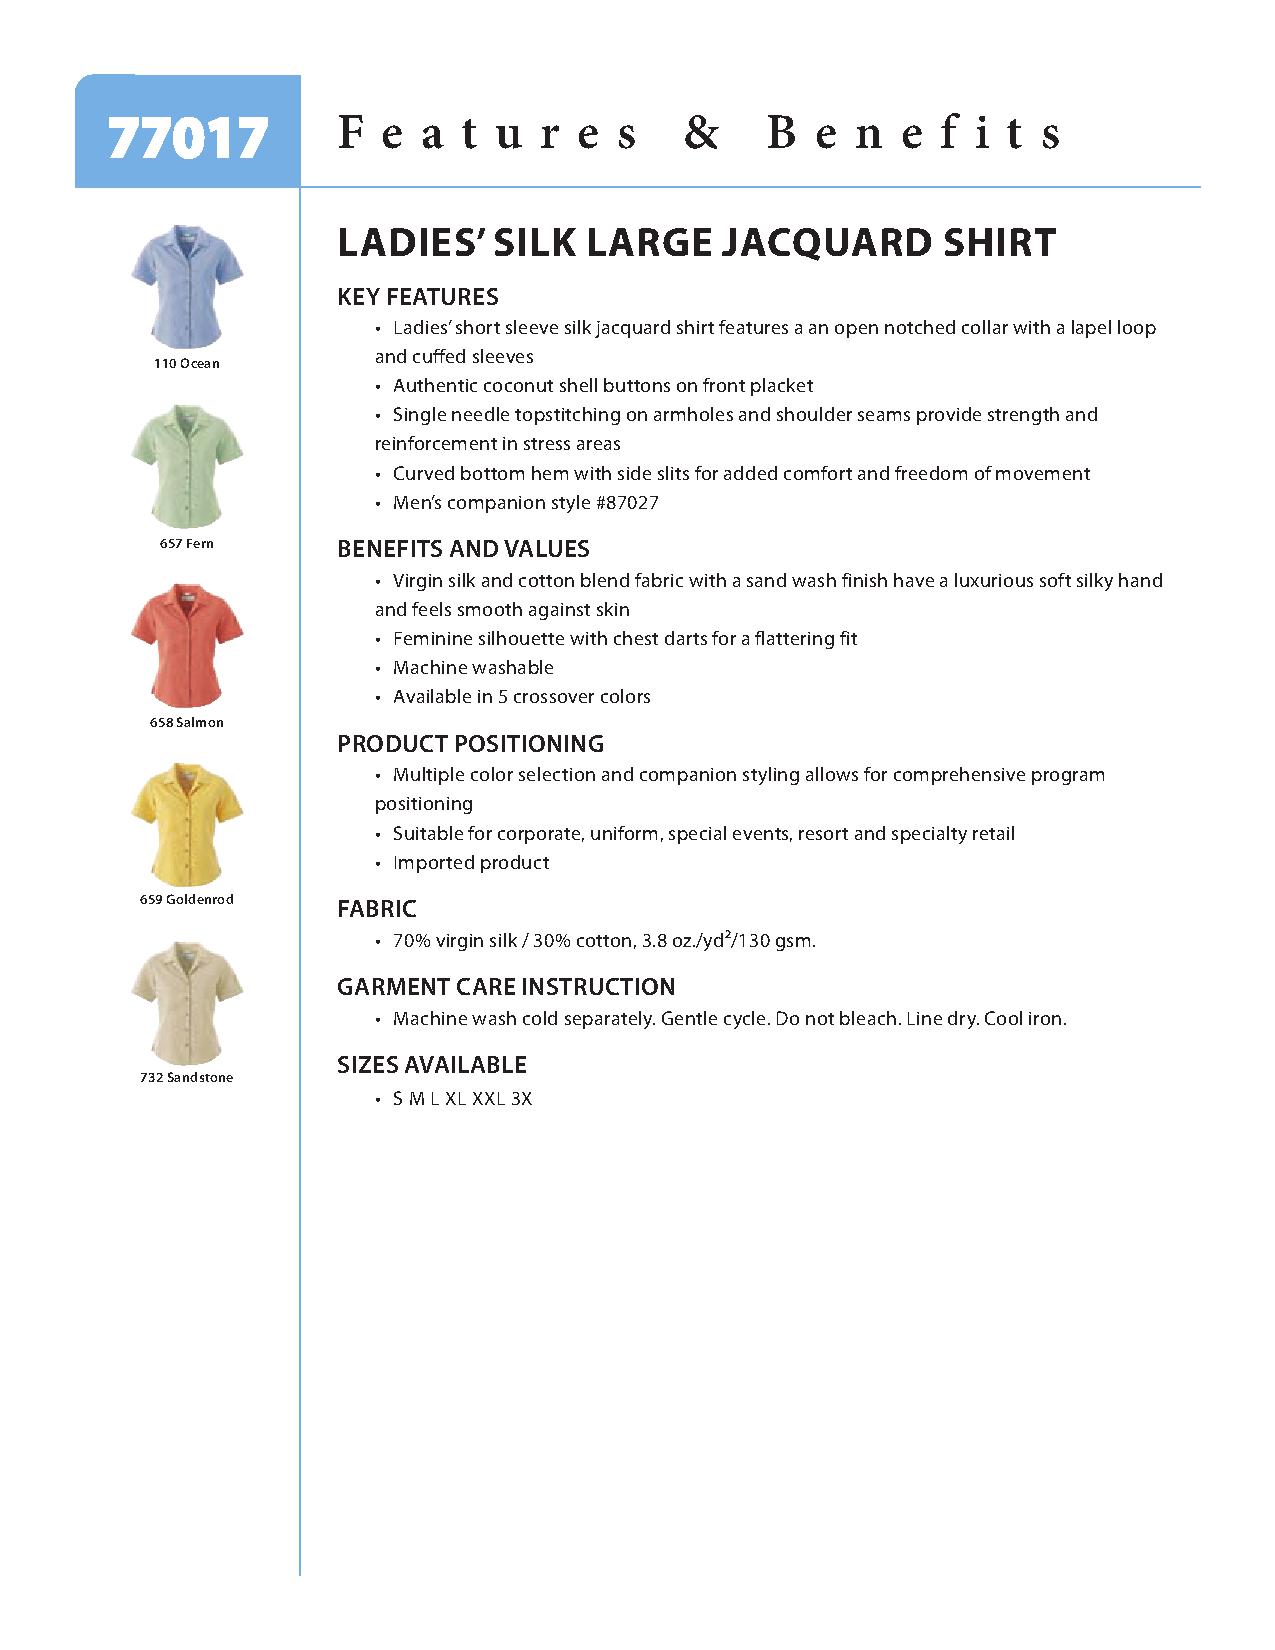 Ash City Silk blend 77017 - Ladies' Silk Large Jacquard Shirt